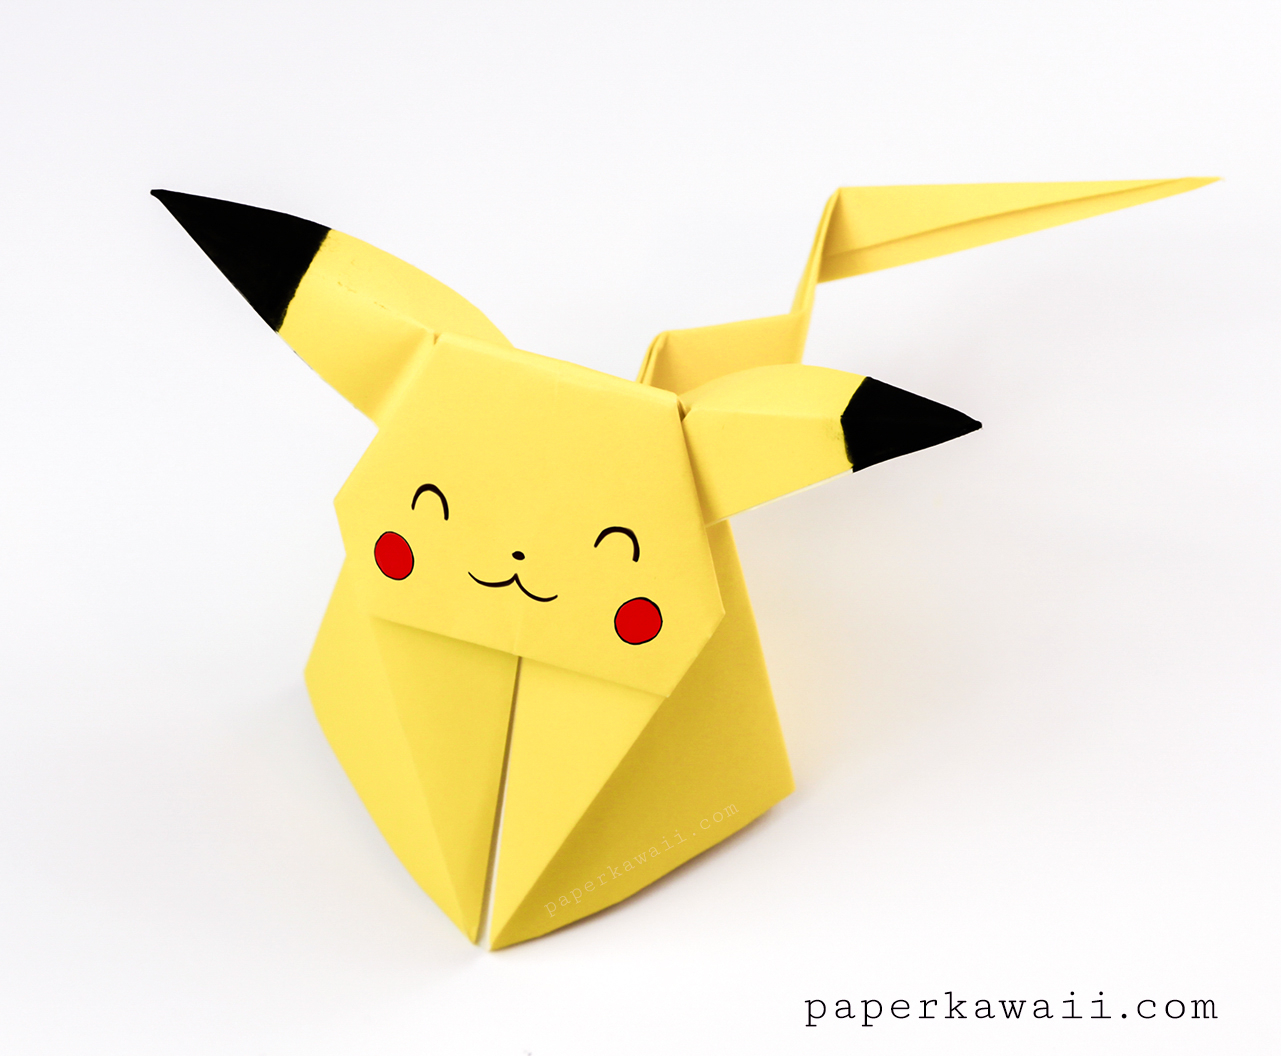 Origami Animals Instructions Printable Origami Pikachu Tutorial Cute Origami Pokemon Paper Kawaii